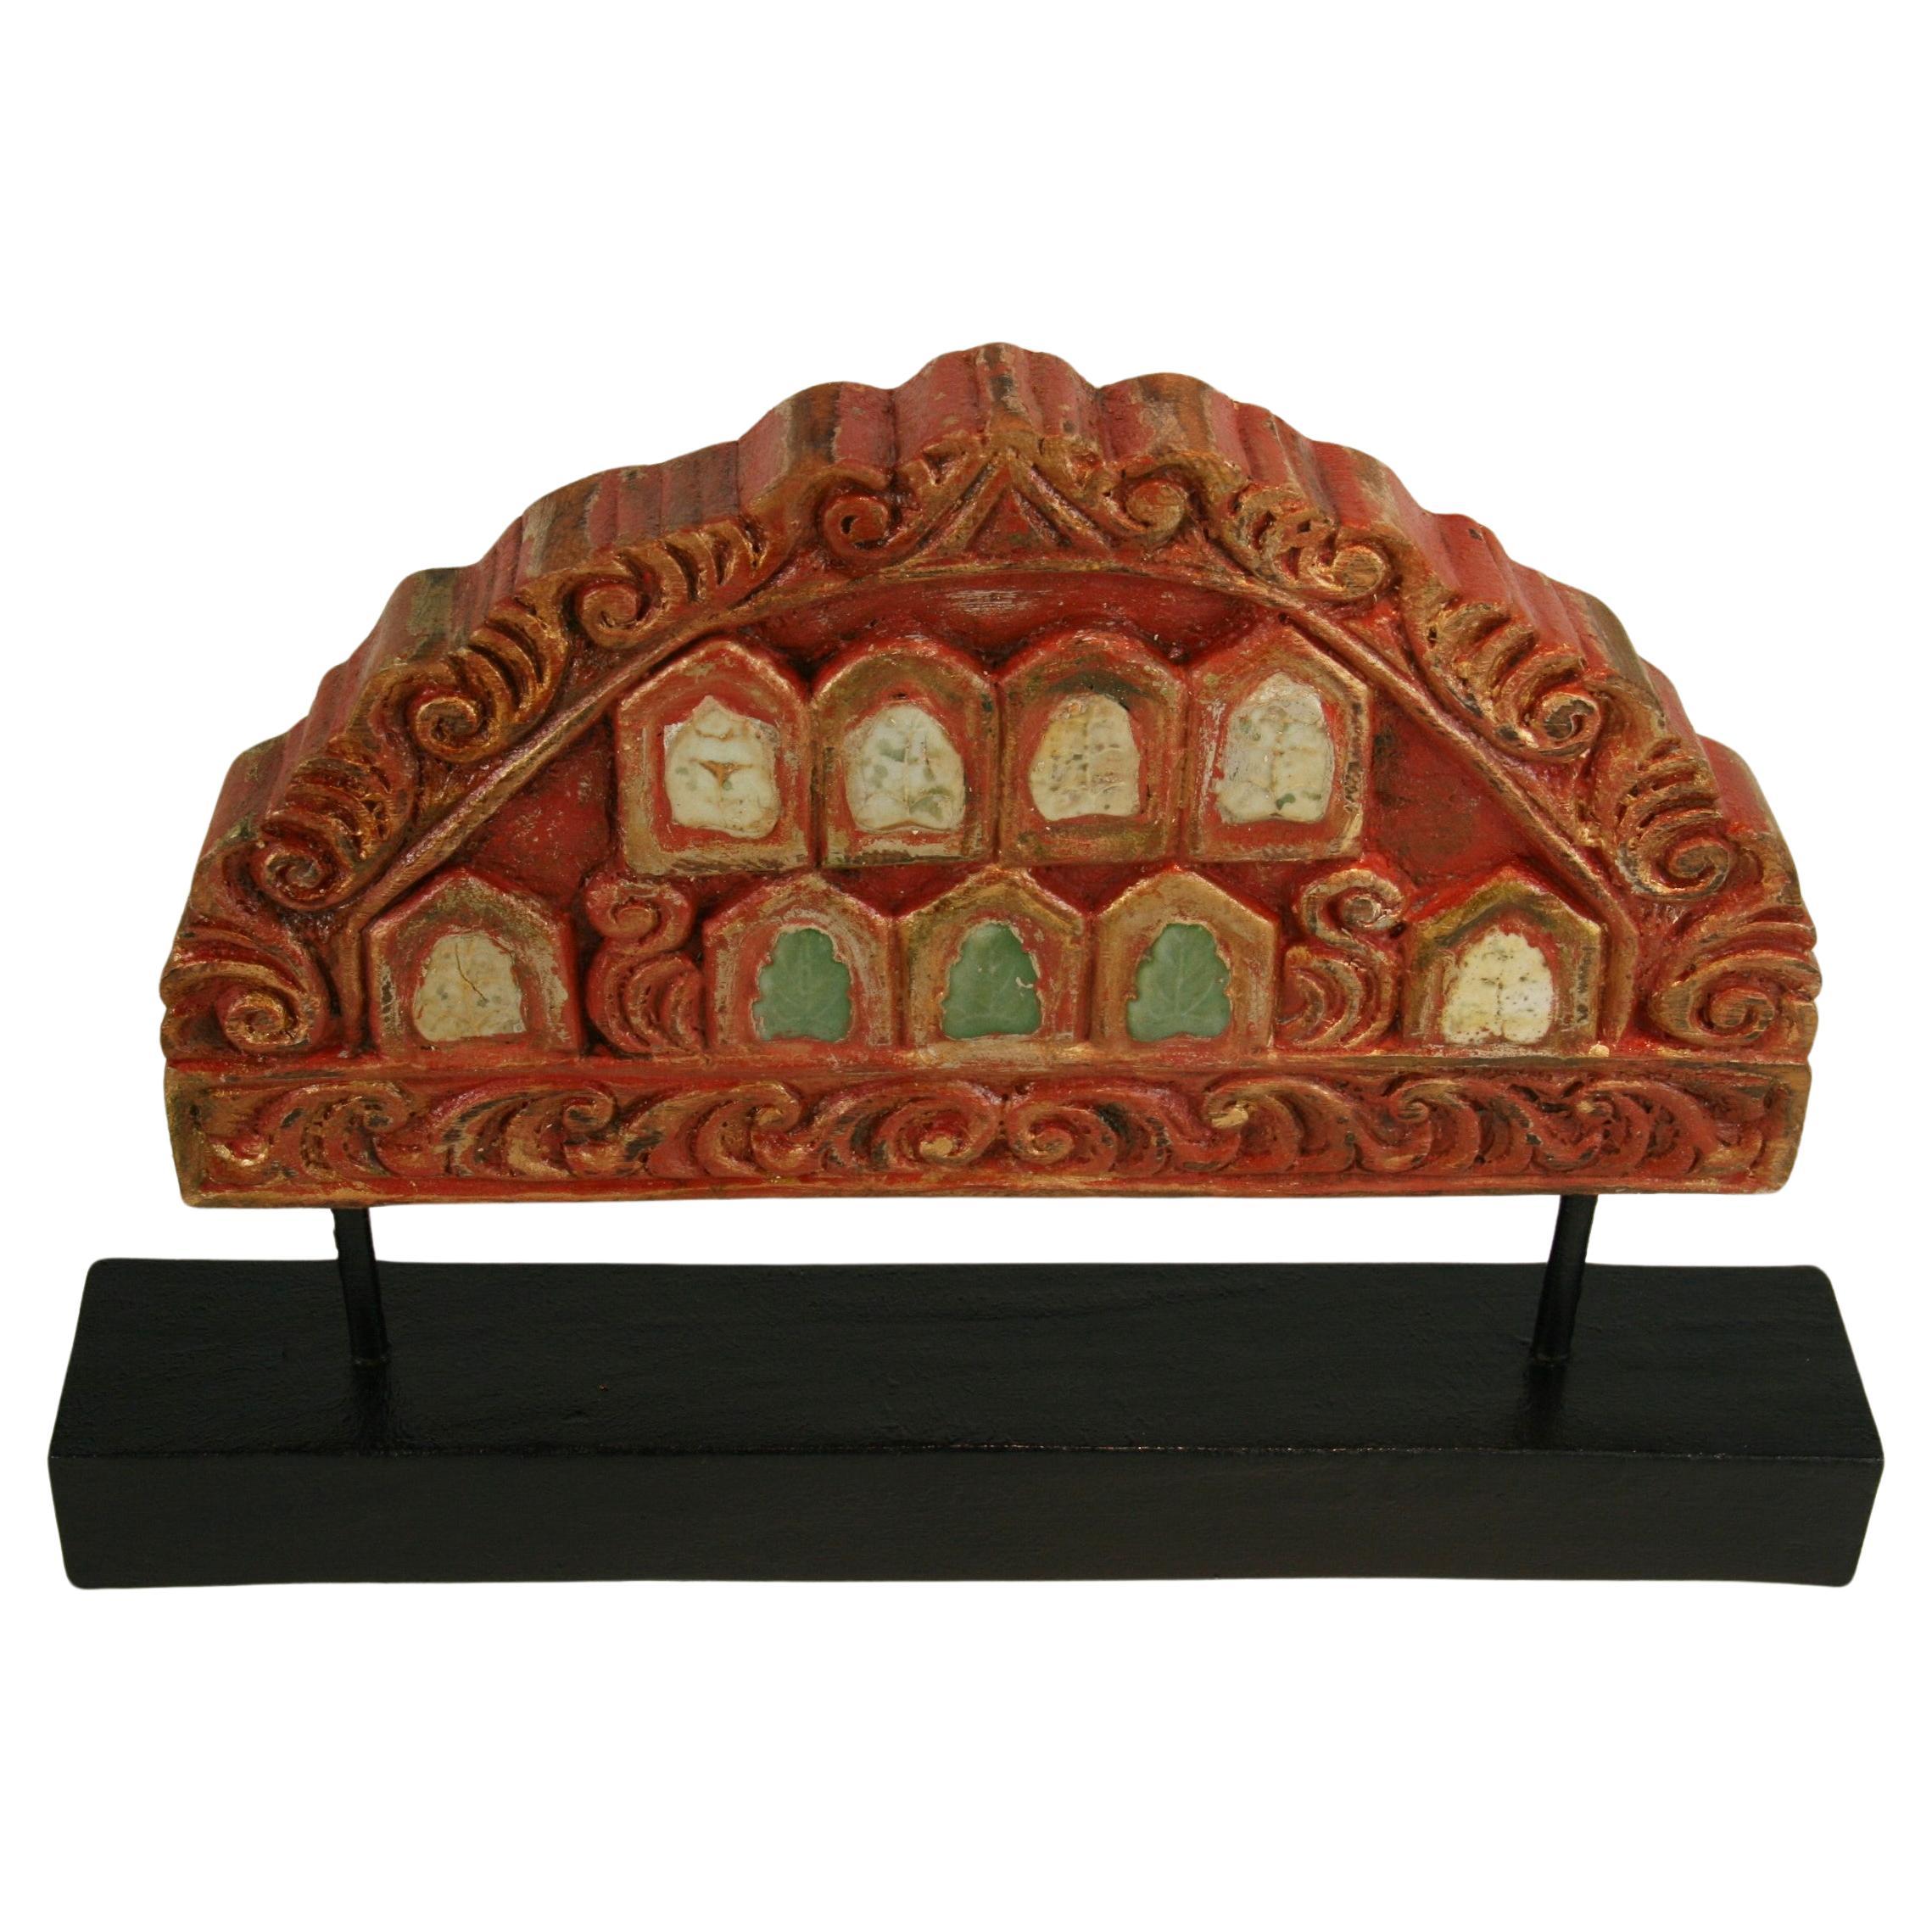 Fragments de temples indiens avec incrustations en céramique